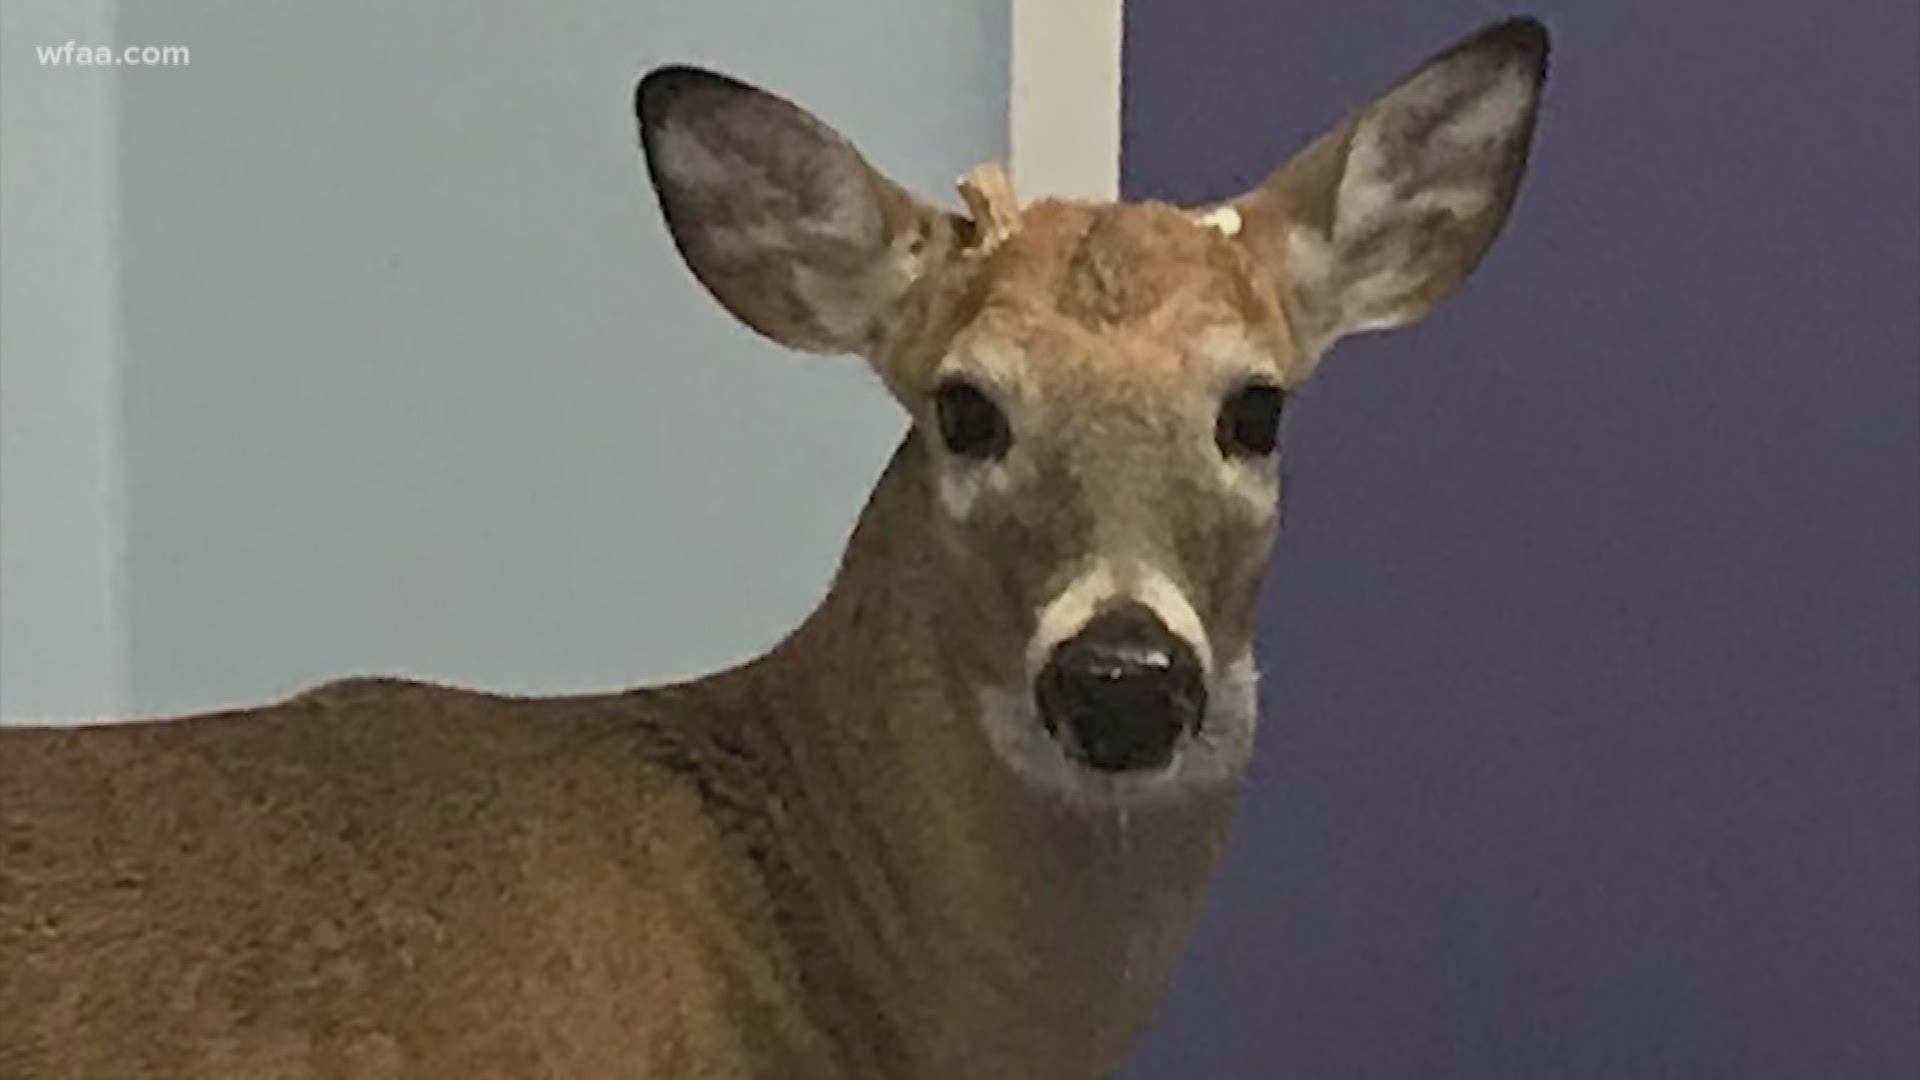 Deer makes surprise appearance